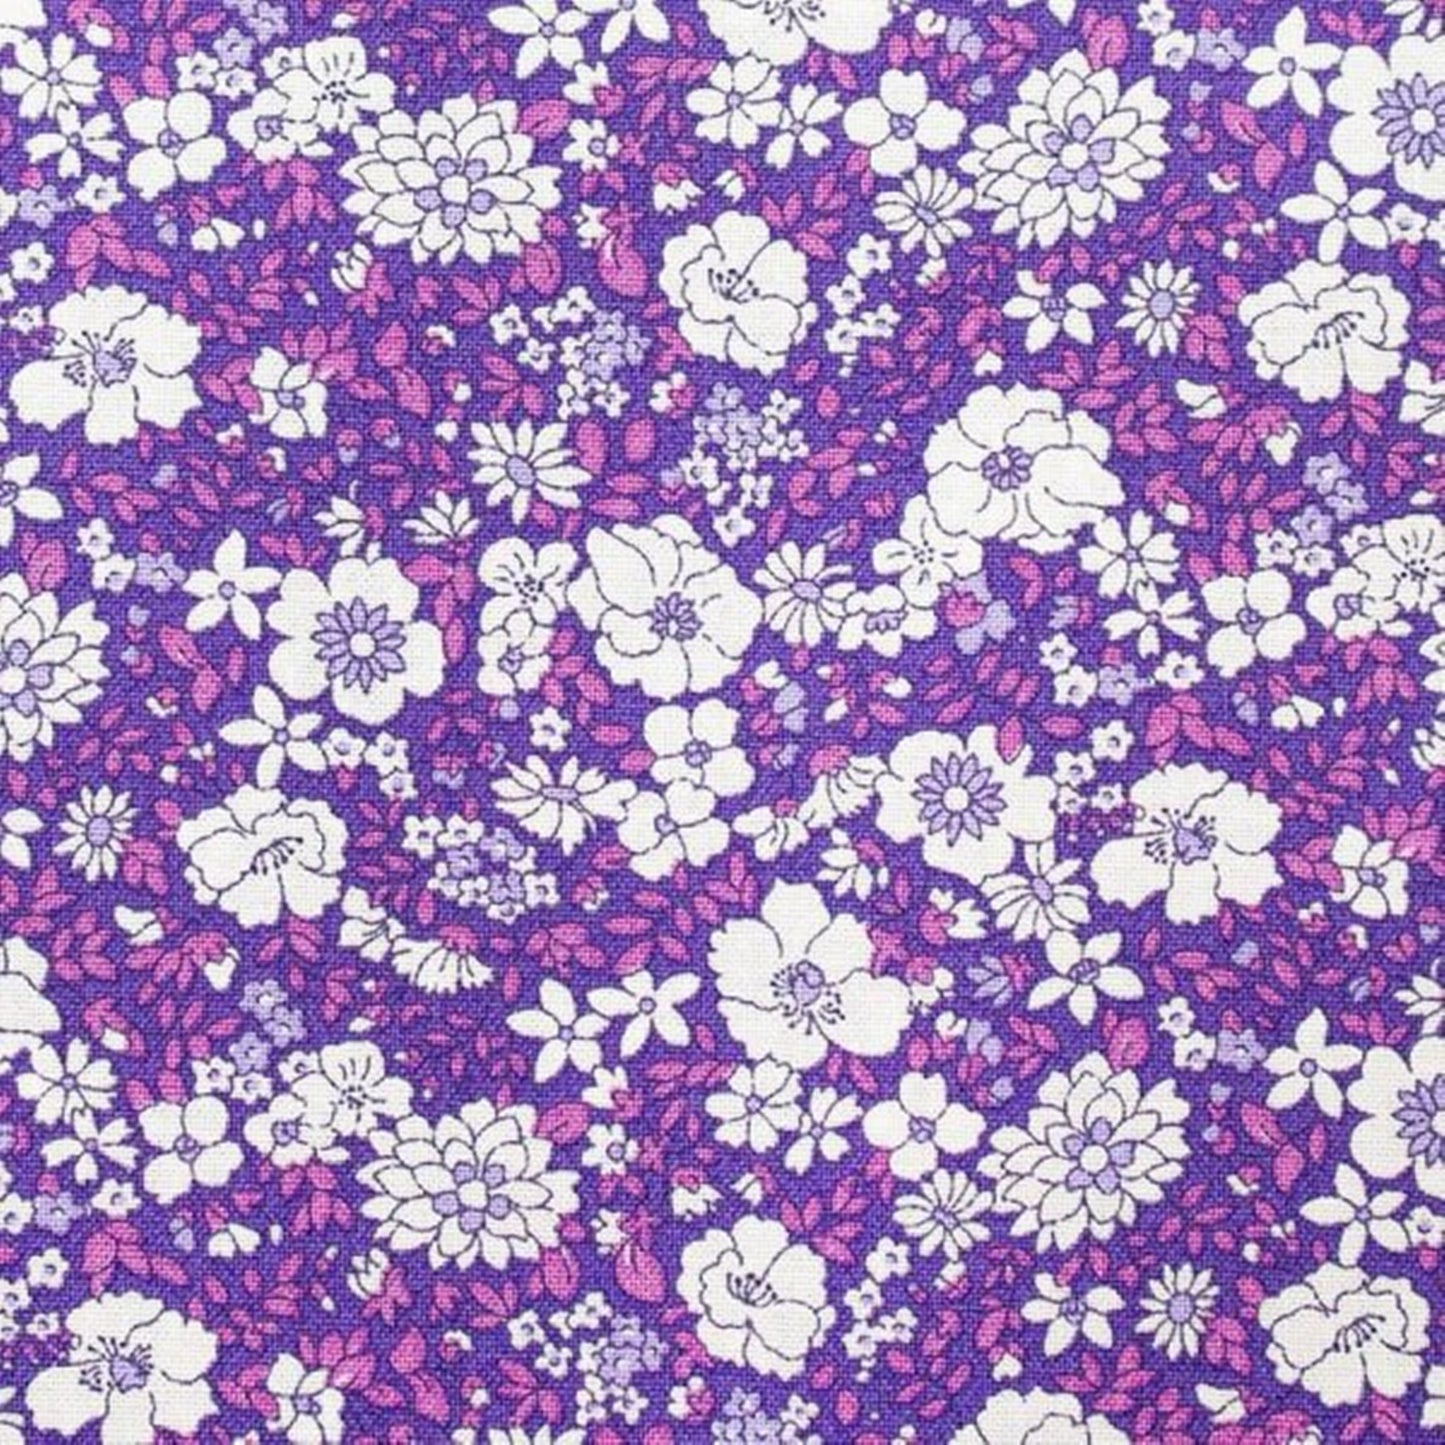 Liberty Flower Show Botanical Jewel bundle A - 5 Fat Eighths cotton quilt fabric